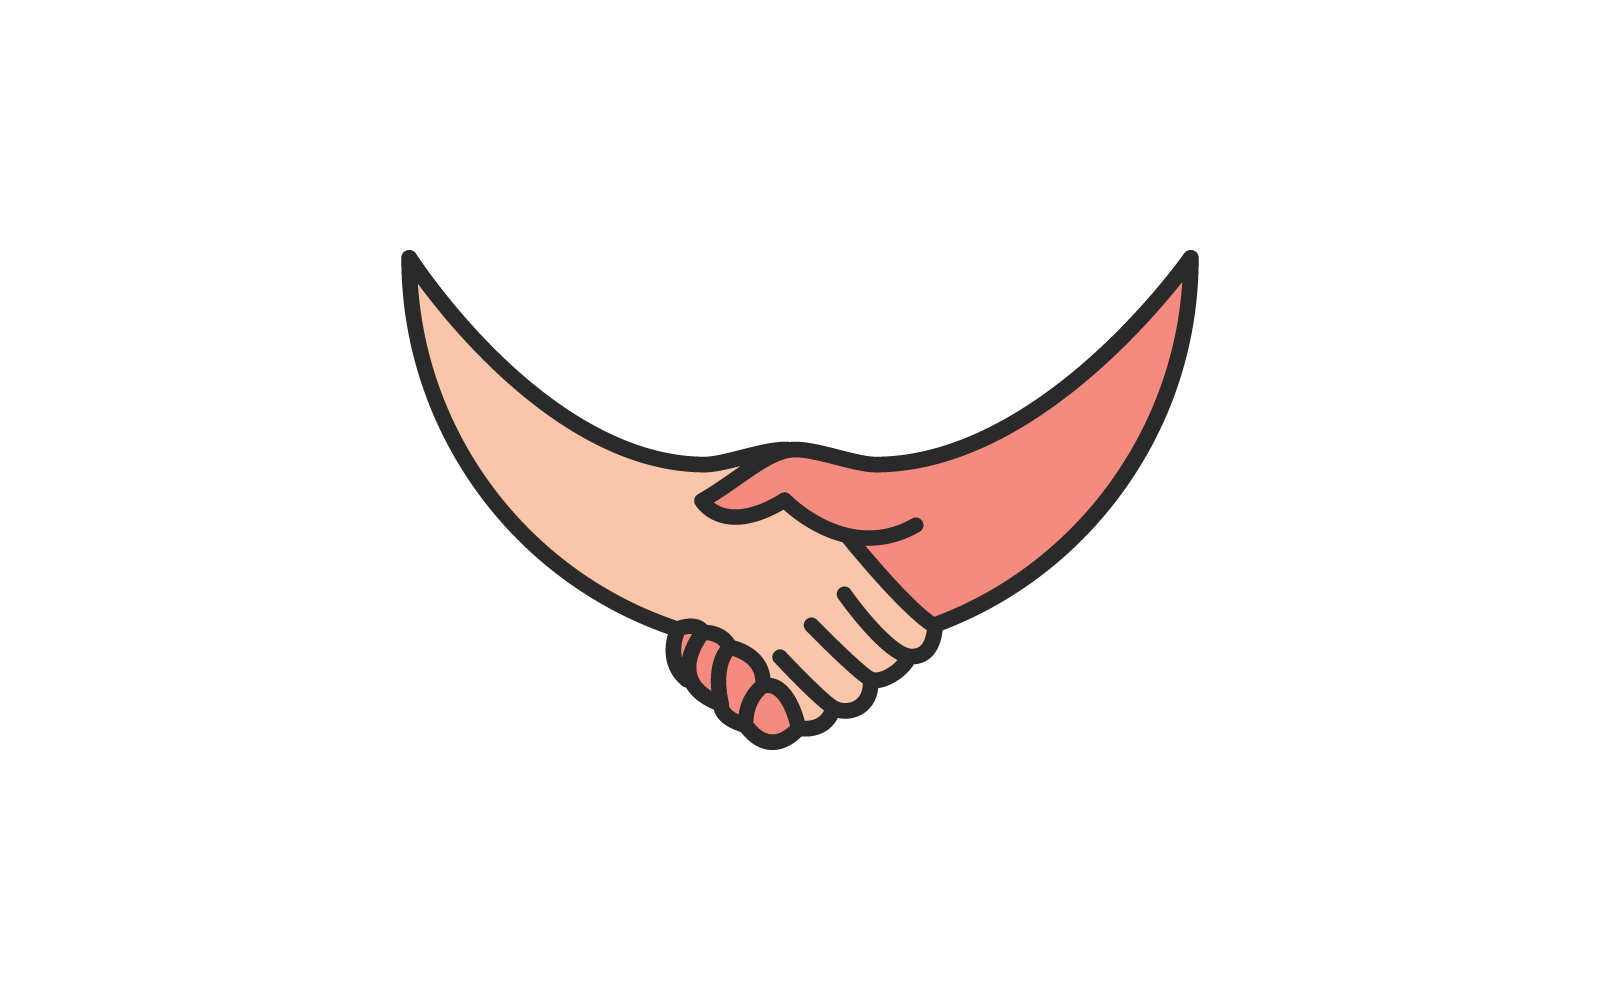 Hand Shake logo template vector illustration